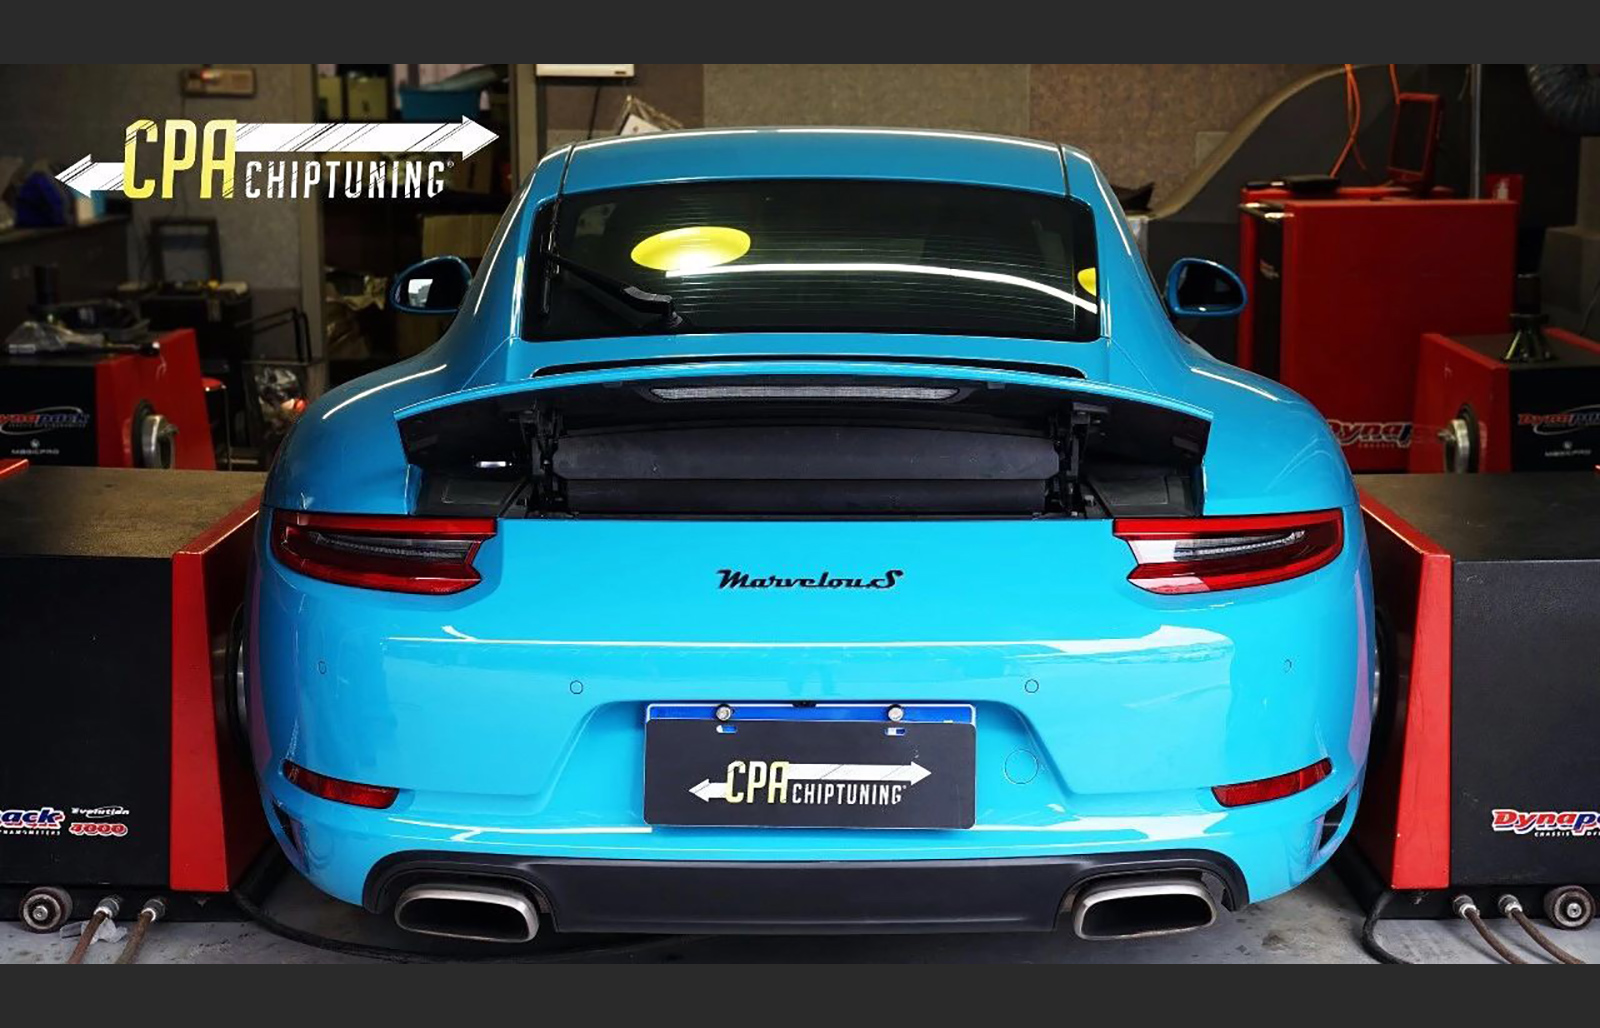 Porsche Power